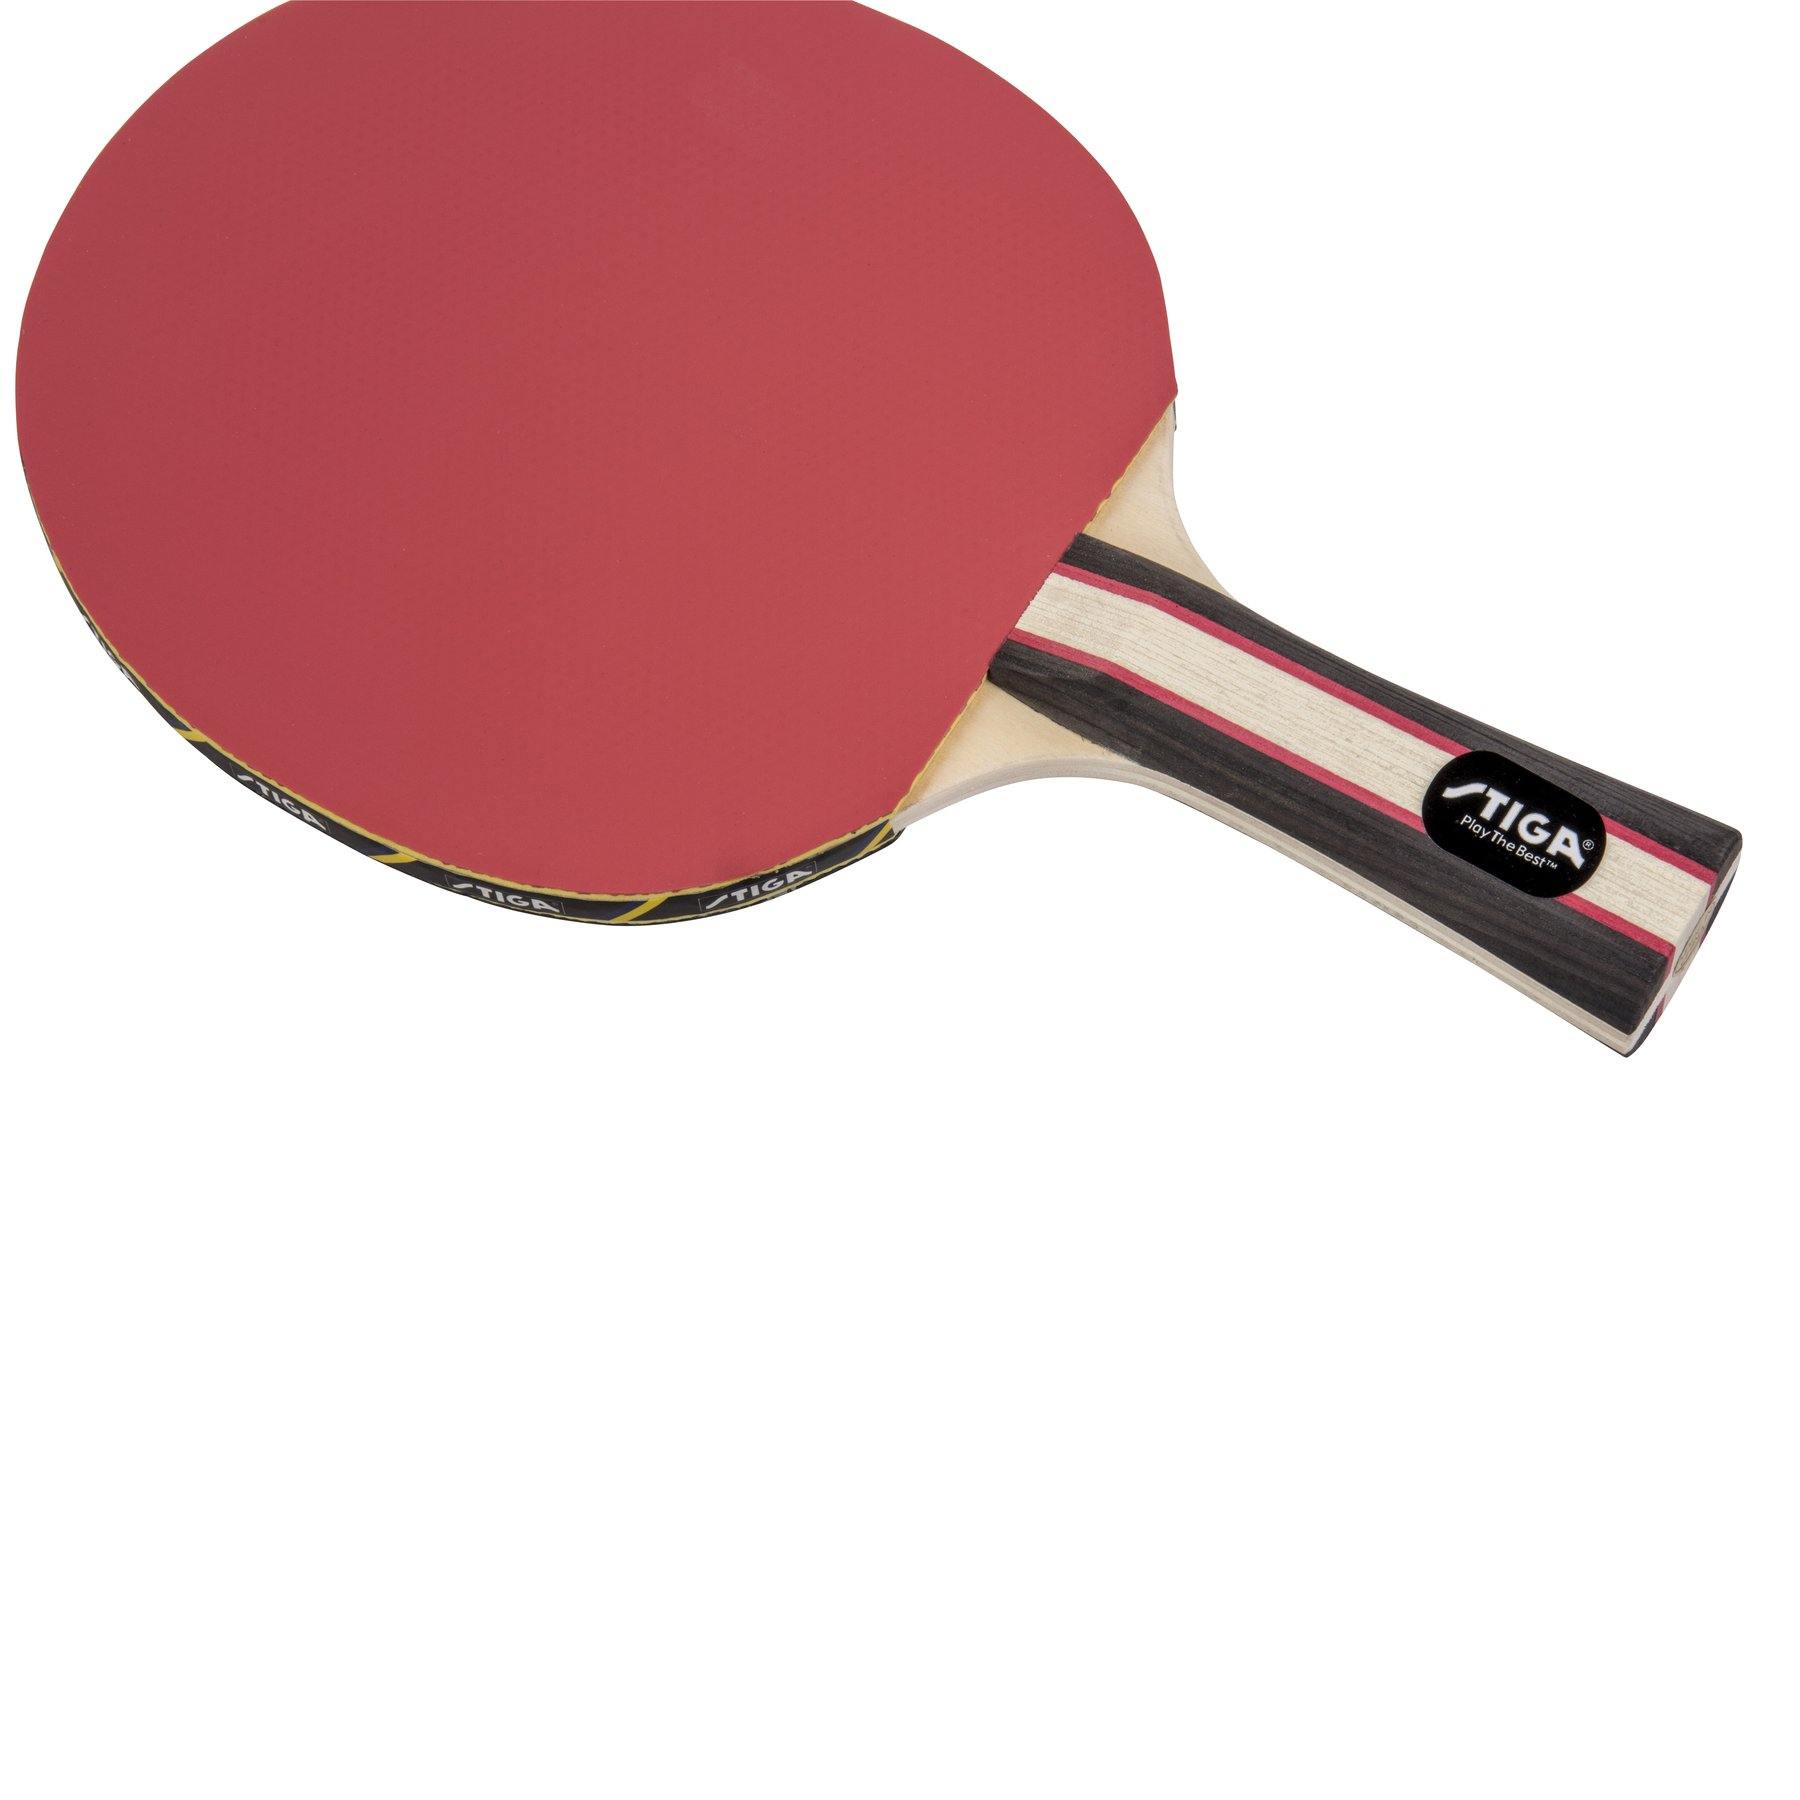 Stiga Table Tennis STIGA - Performance Table Tennis Set (2 player set) - T1363